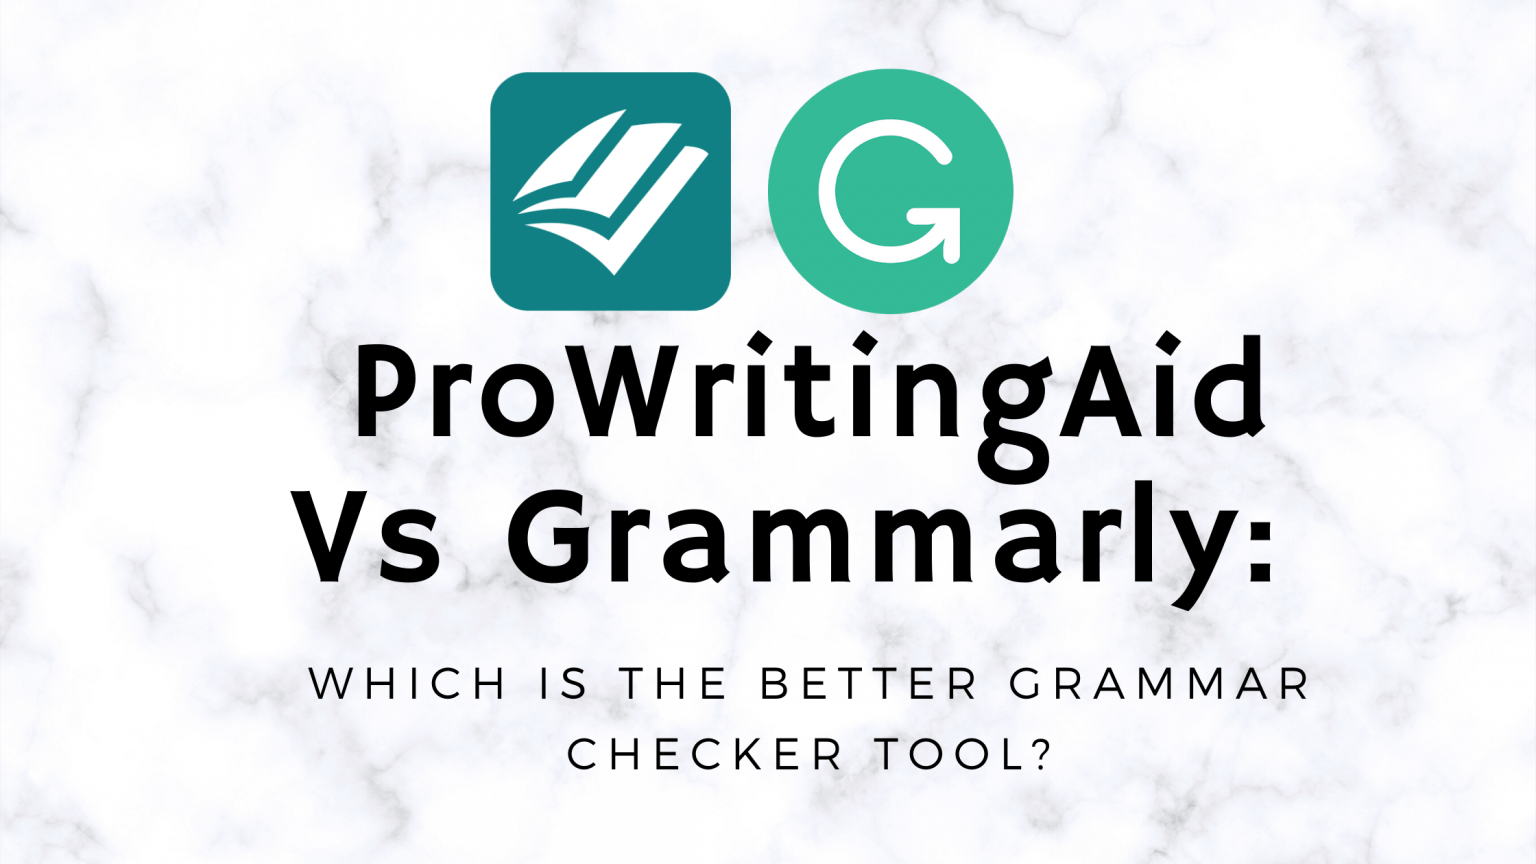 grammarly vs prowritingaid